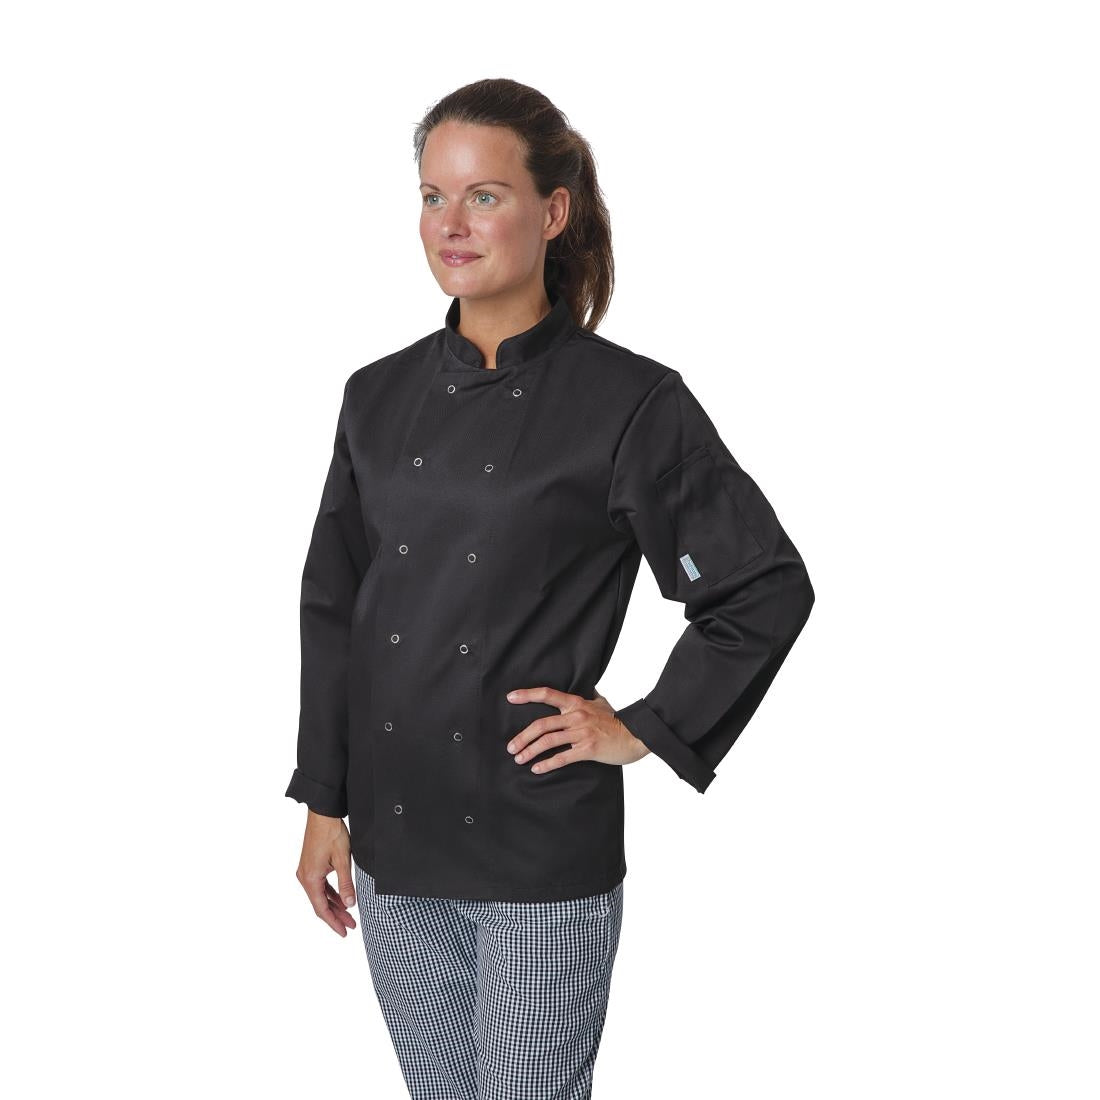 A438-L Whites Vegas Unisex Chefs Jacket Long Sleeve Black L JD Catering Equipment Solutions Ltd